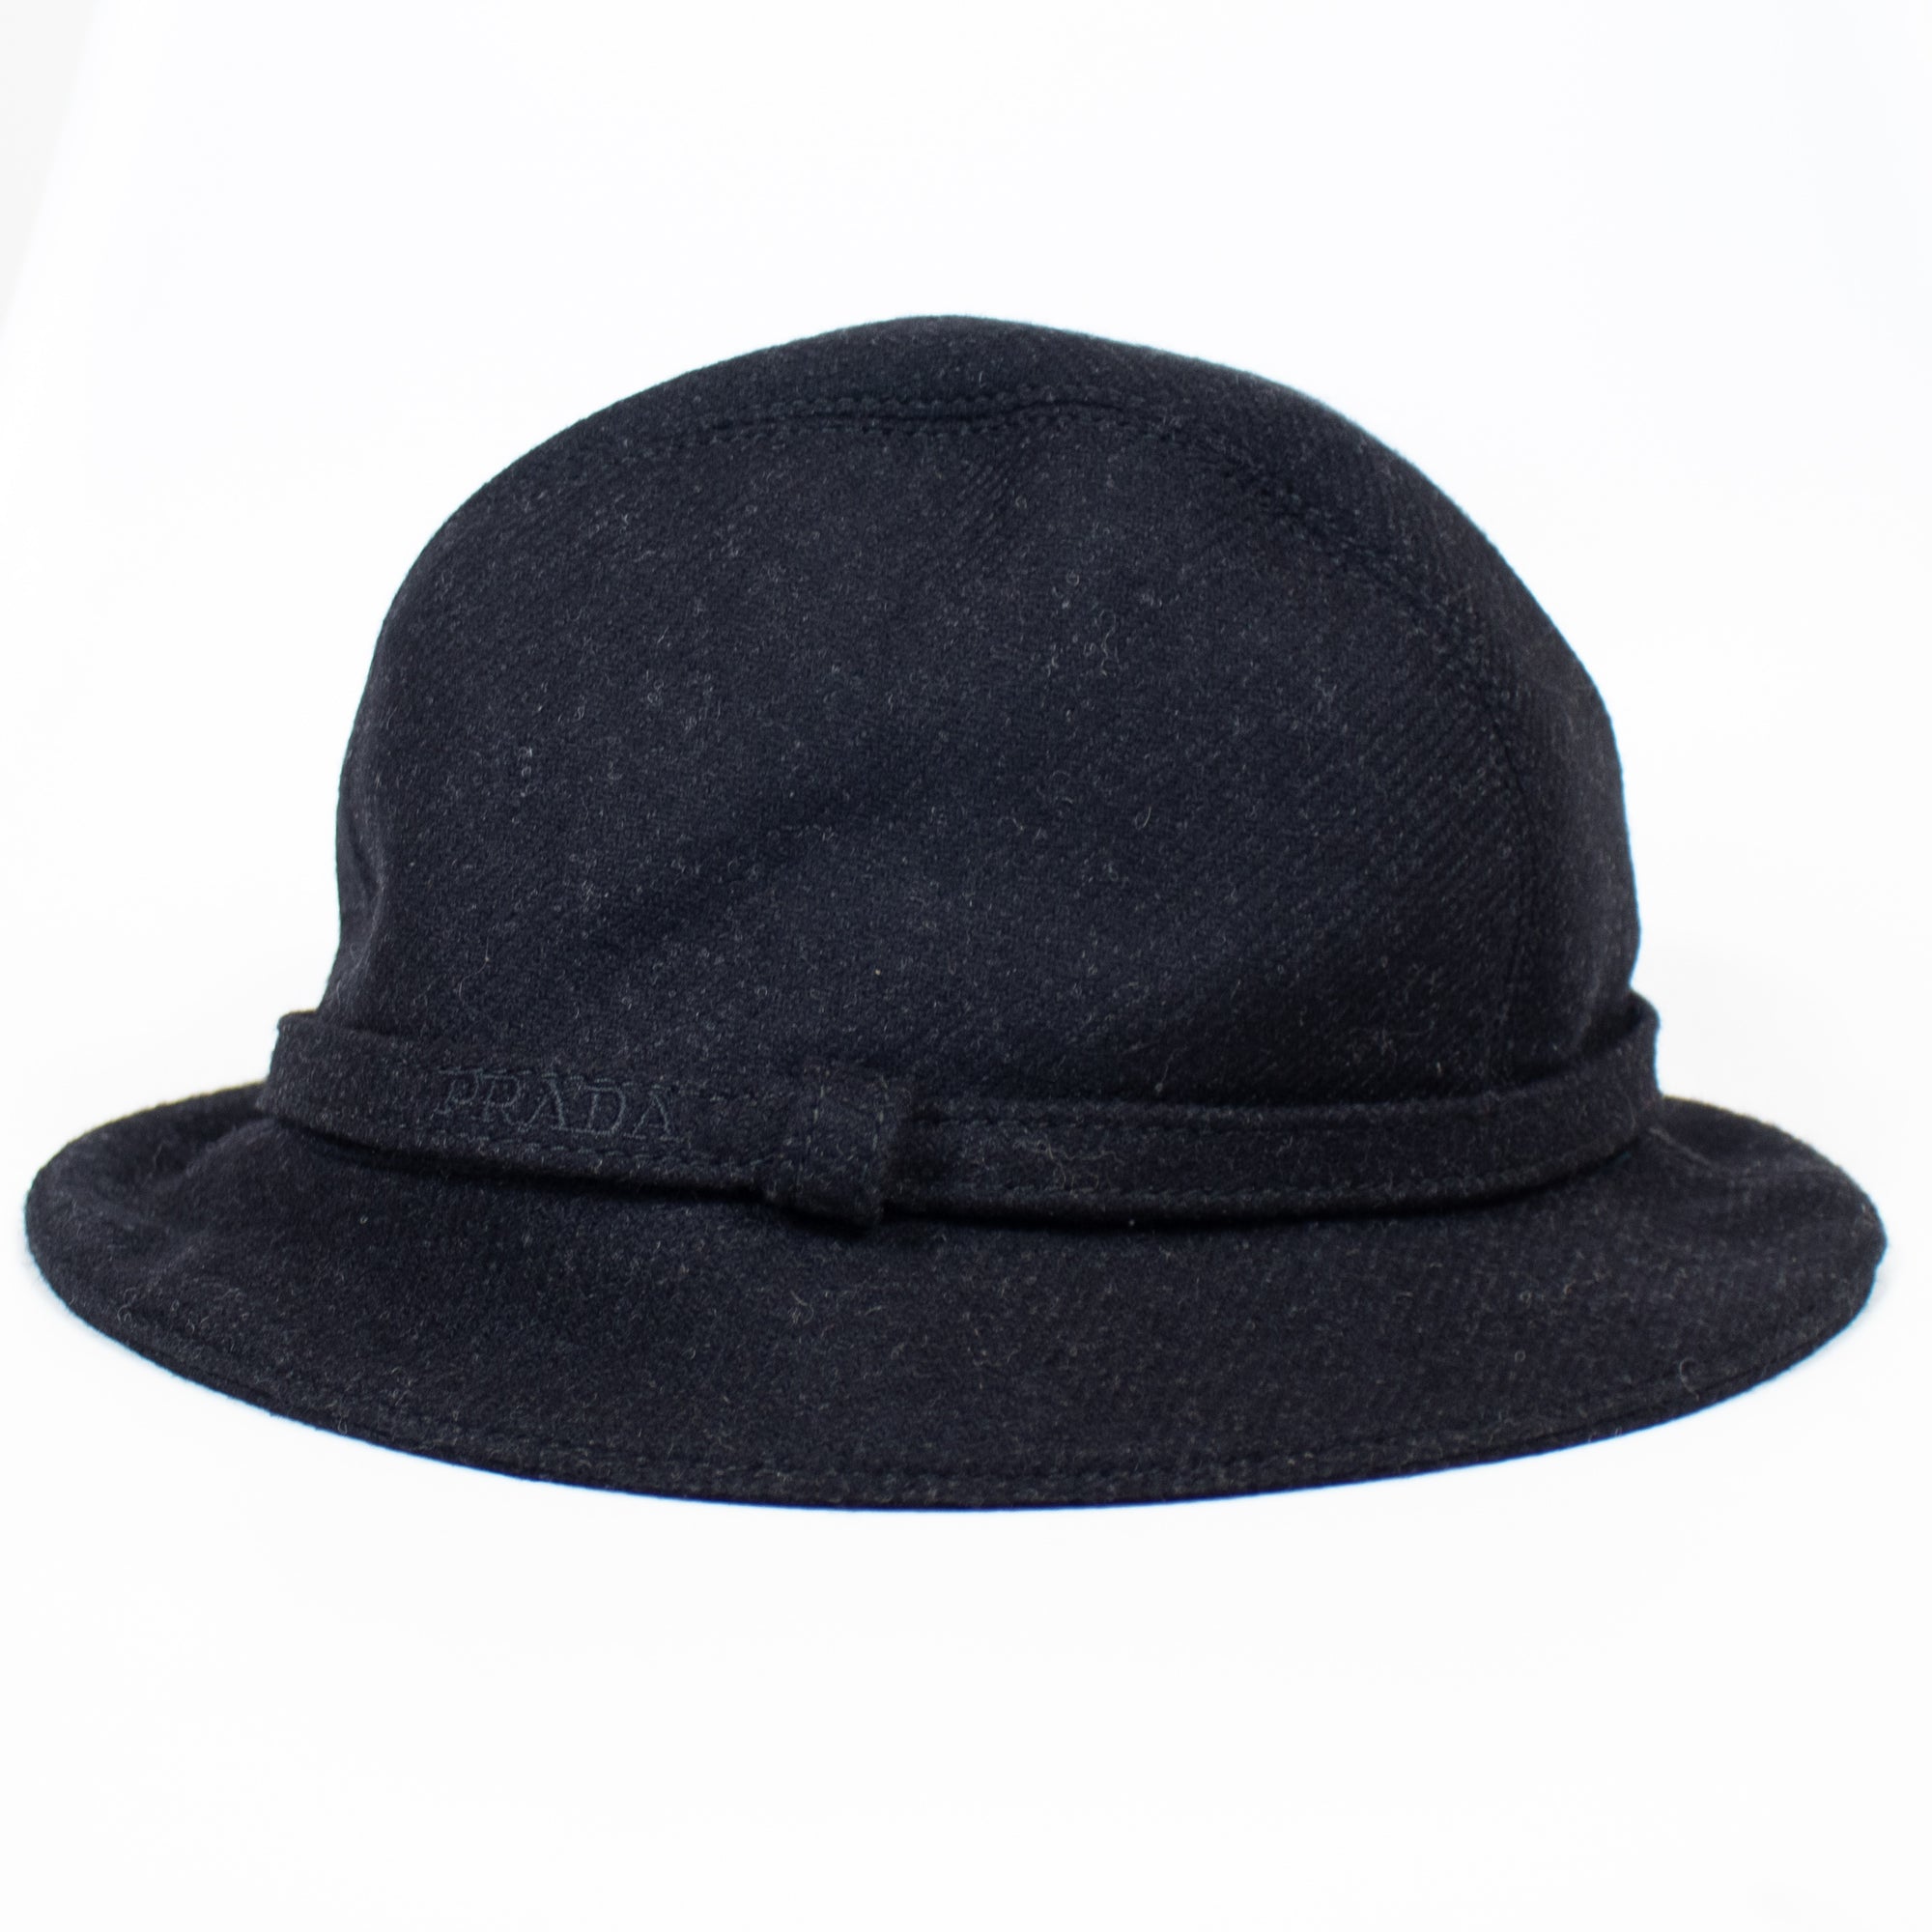 prada hat